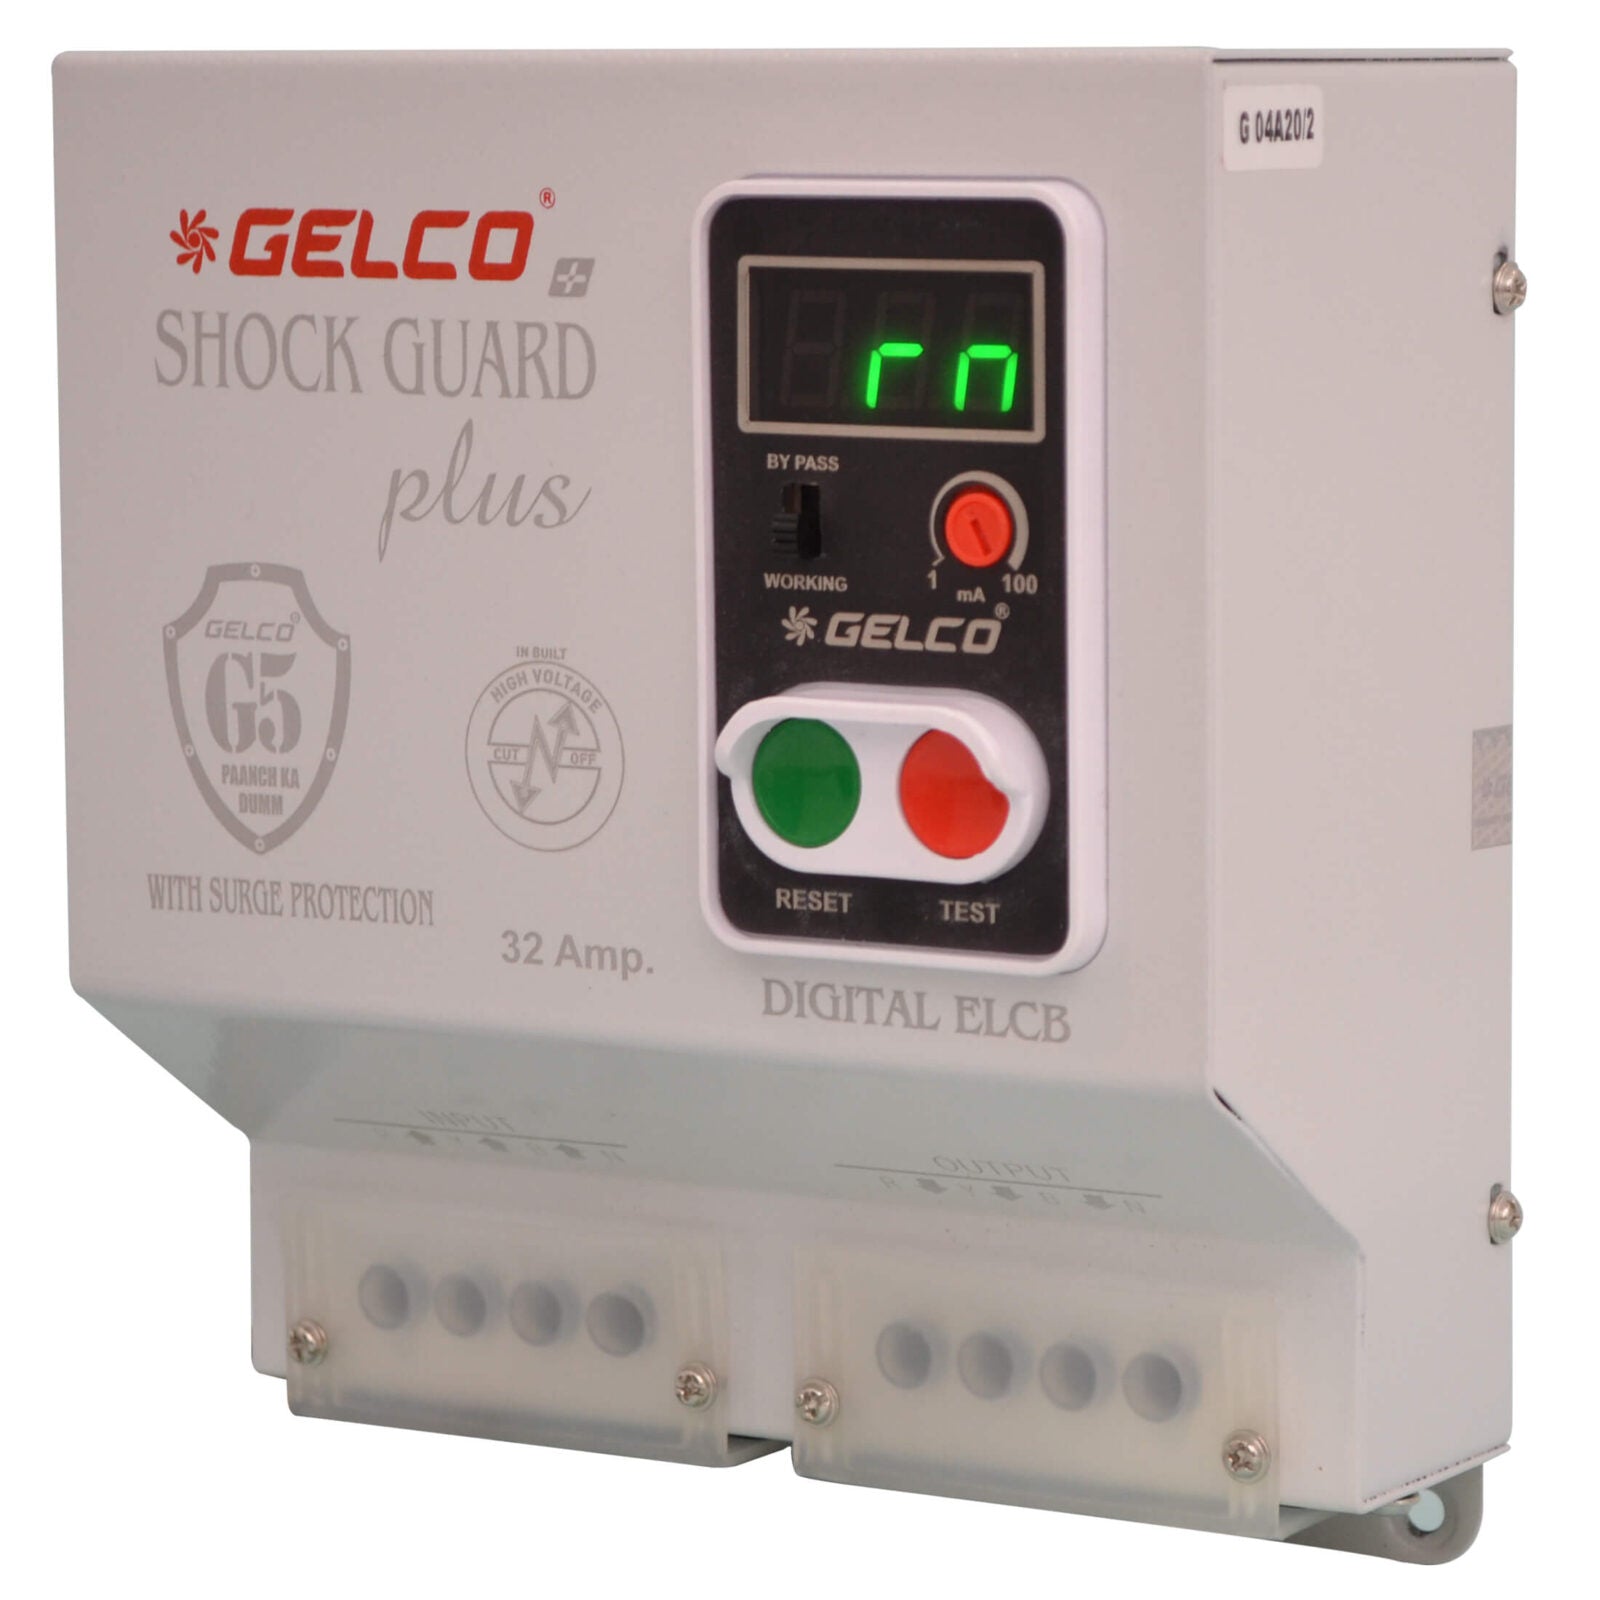 Shock Guard Plus - Gelco Electronics Pvt. Ltd.